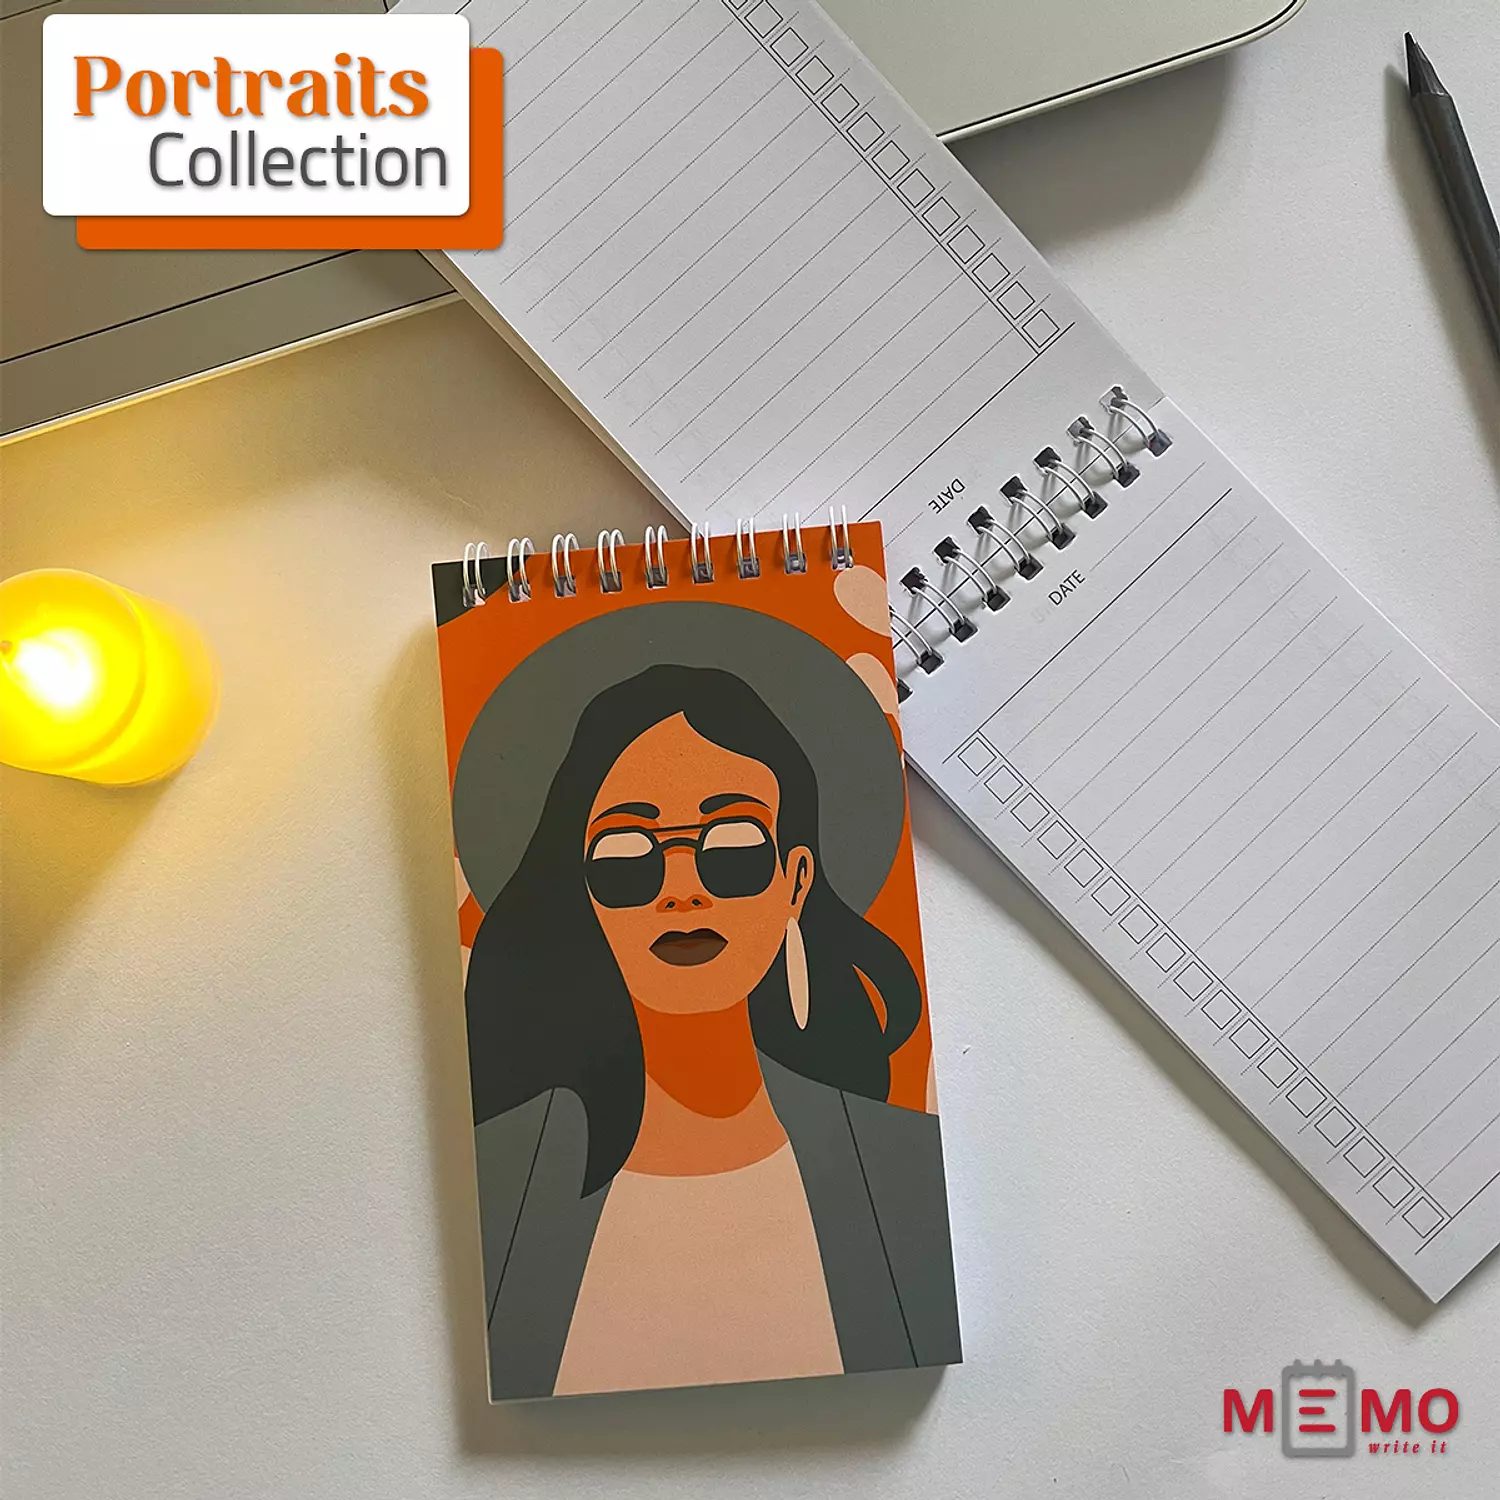  Memo (portraits collection ) To-Do List  7